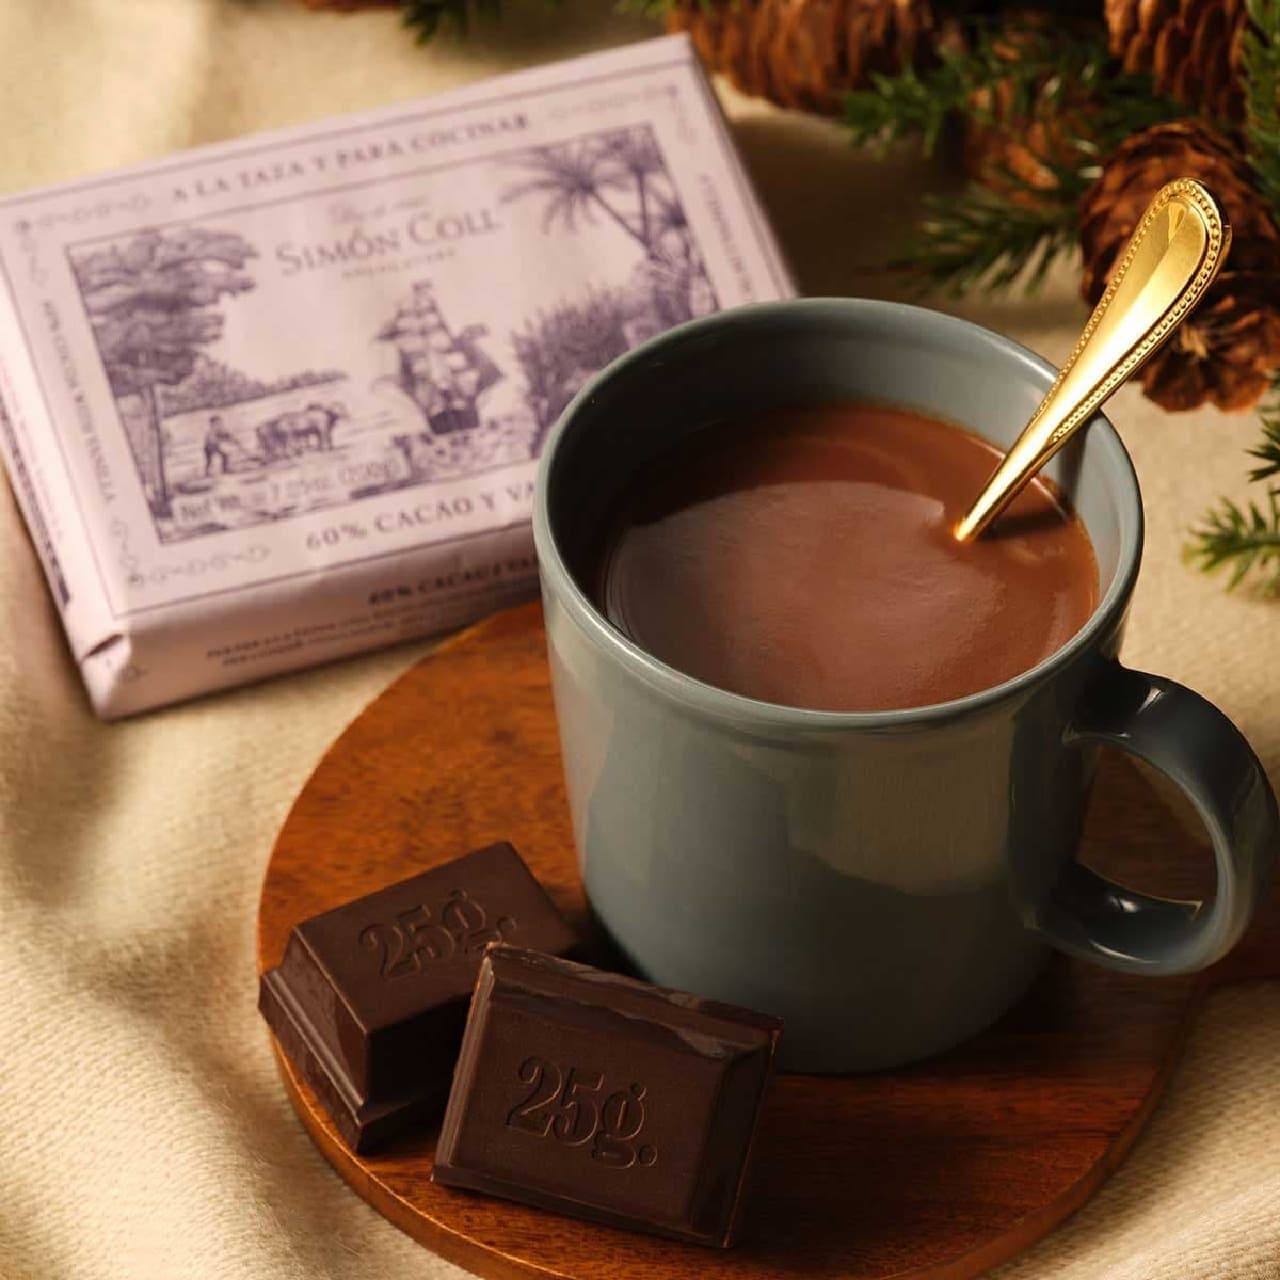 KALDI "Simon Cole Hot Chocolate 60% Cacao (Vanilla/Cinnamon)